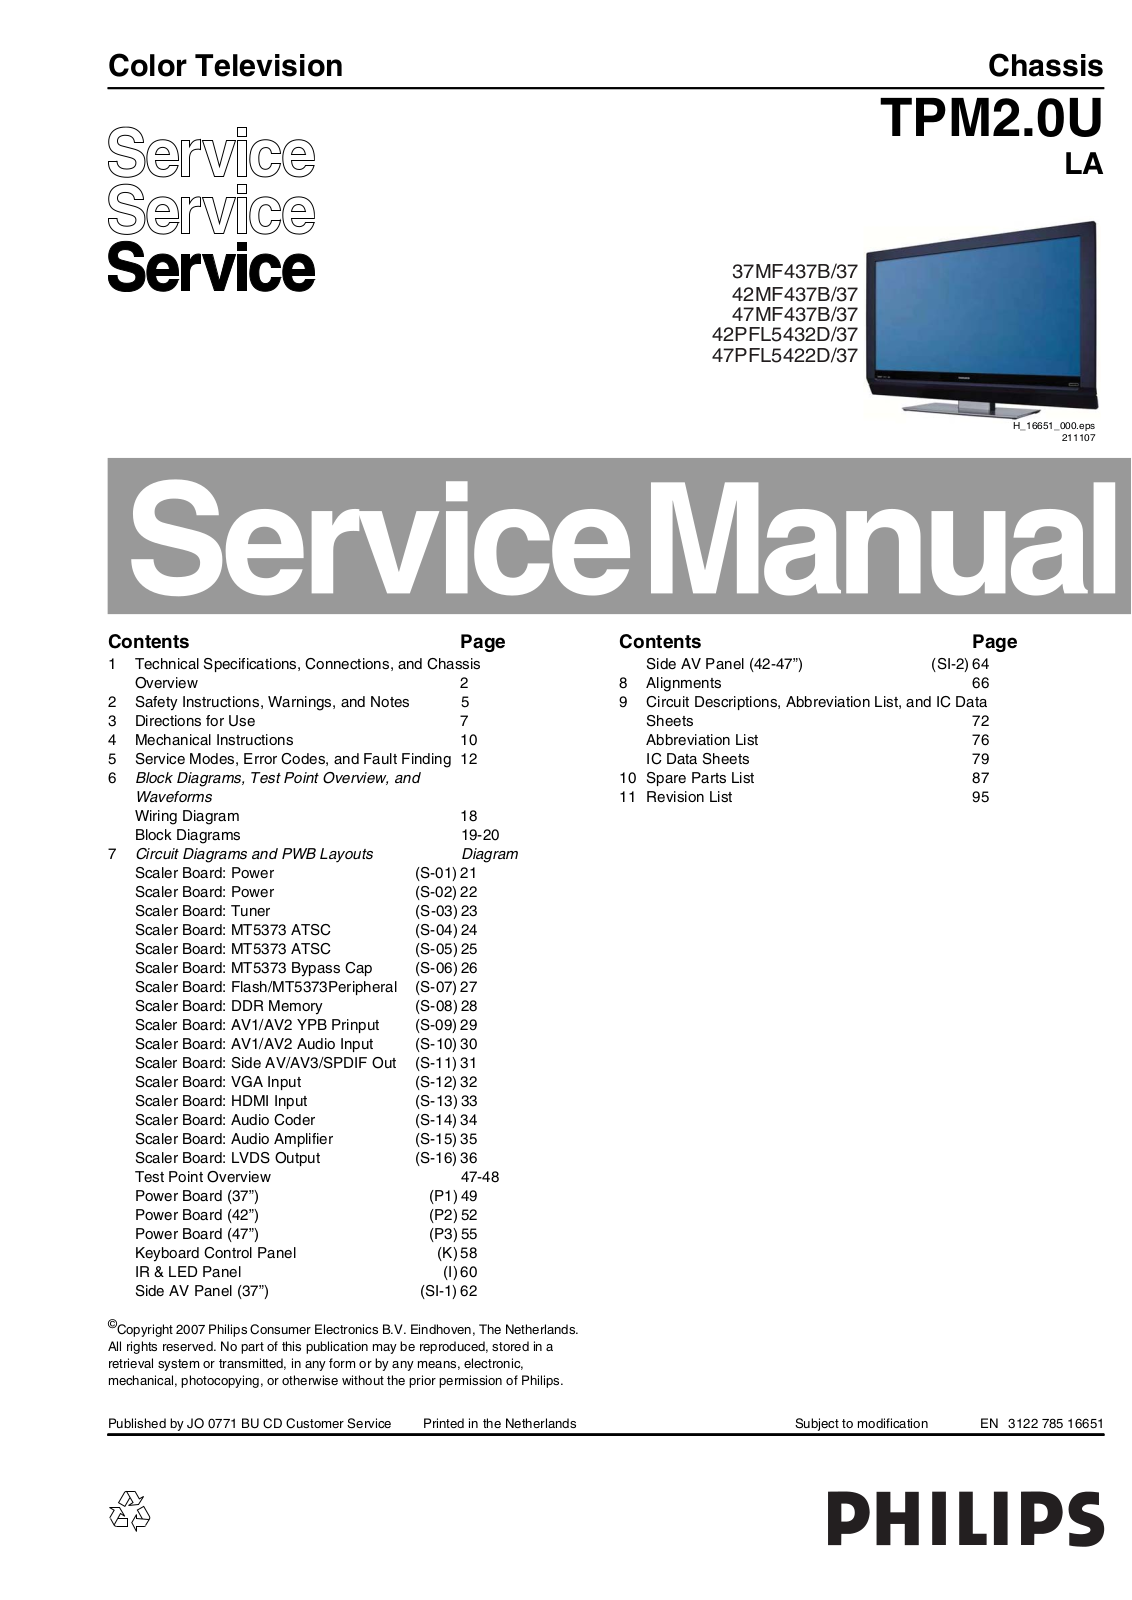 Philips TPM2.0U LA Service Manual